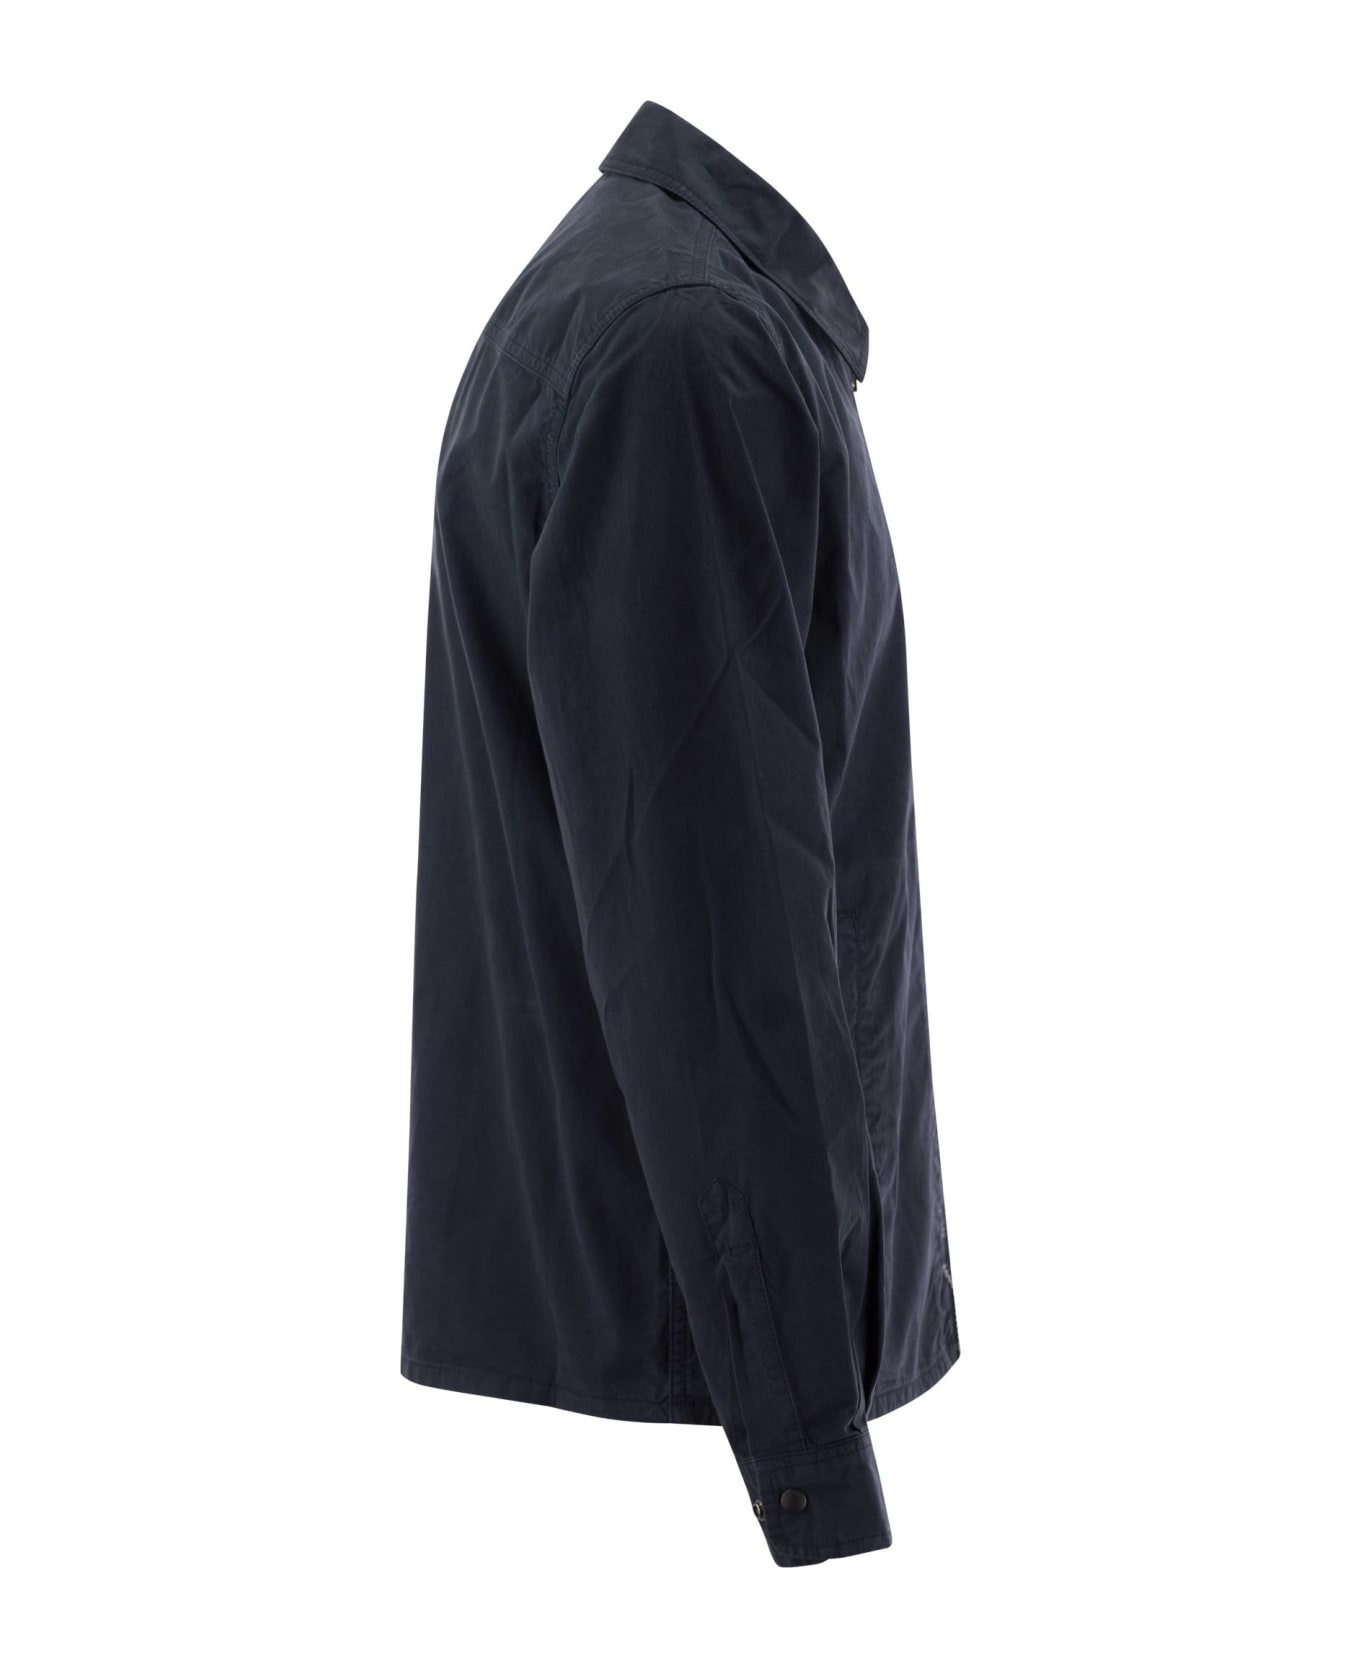 Woolrich Garment-dyed Shirt Jacket In Pure Cotton - Blu